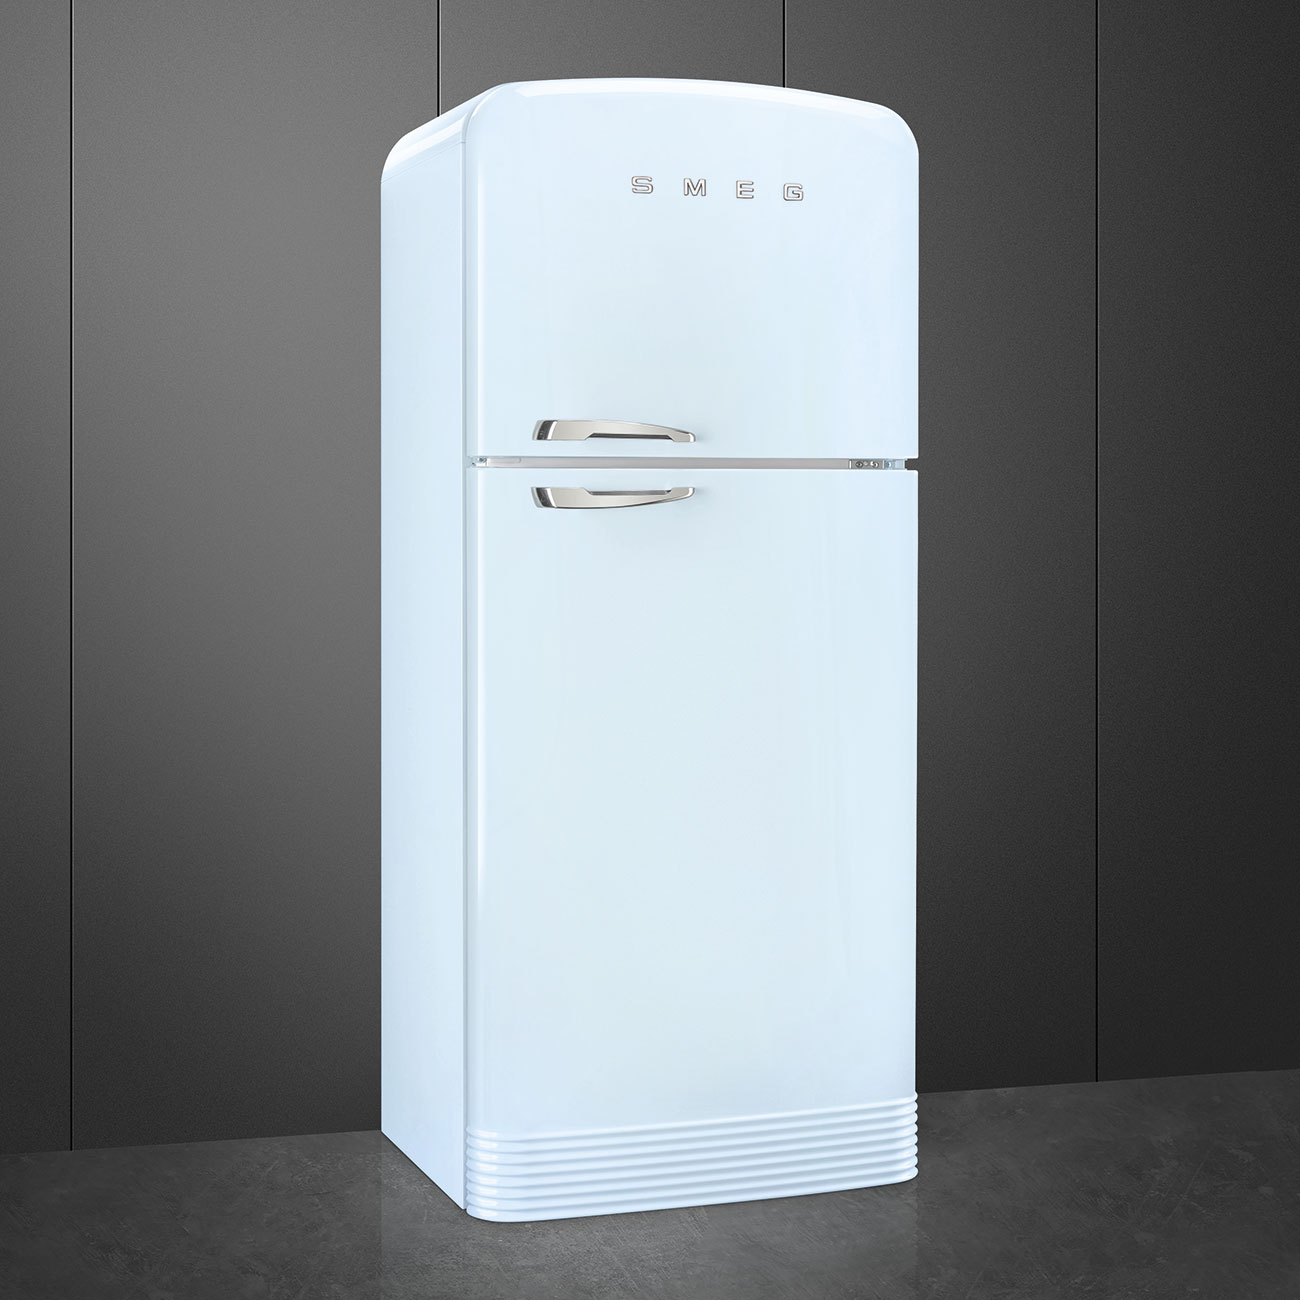 Pastelblauw koelkast - Smeg_3